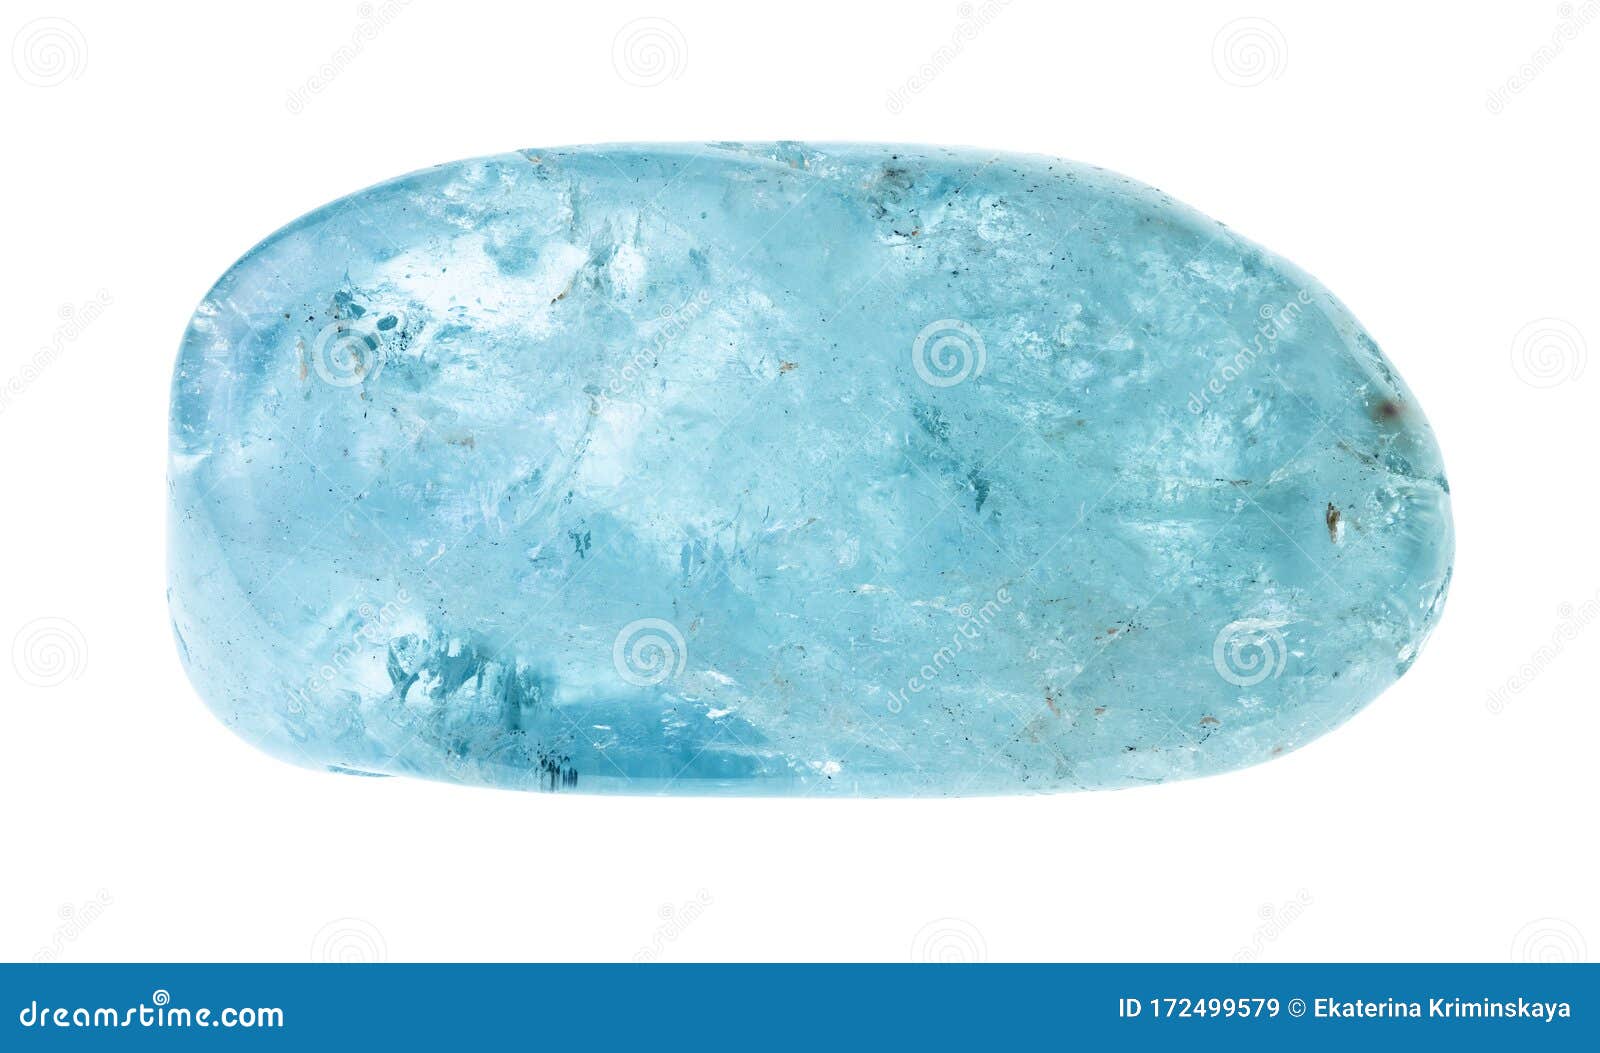 polished aquamarine blue beryl gemstone cutout